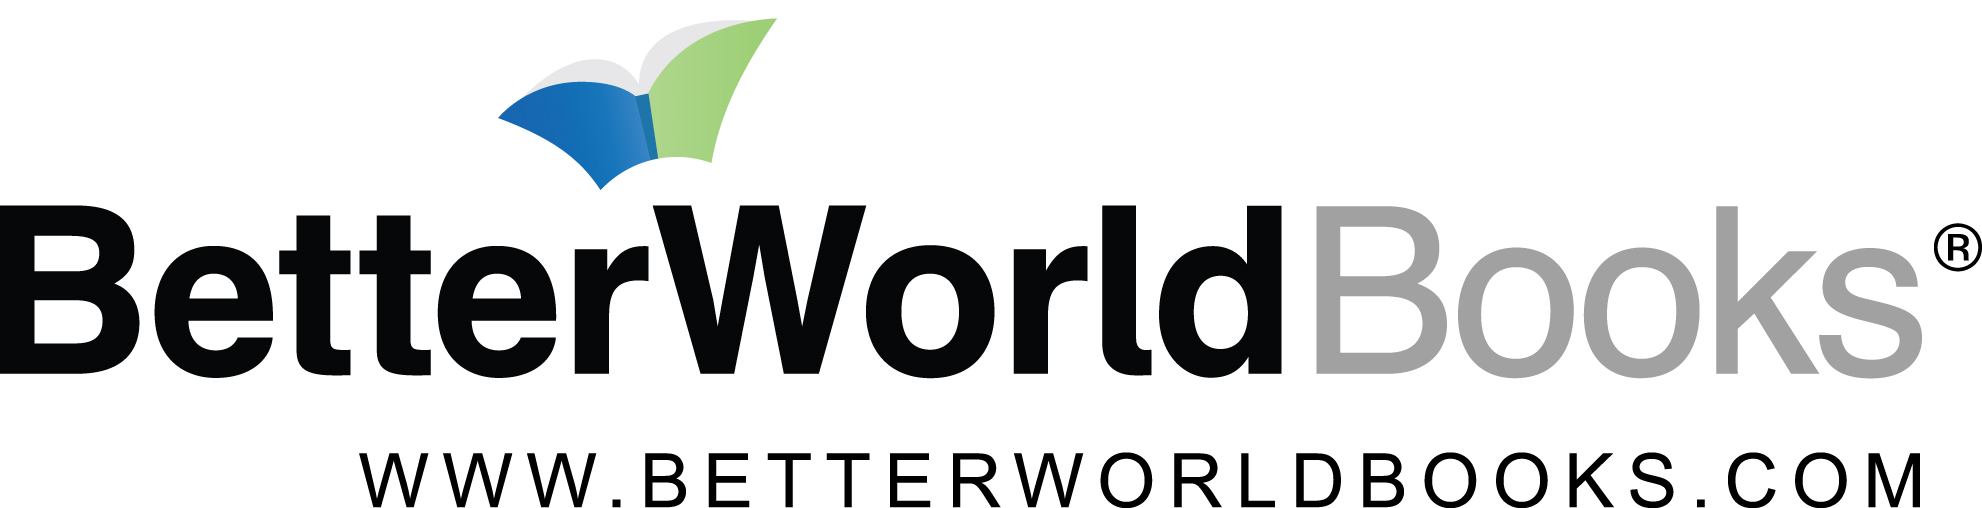 Better World Books Logo photo - 1